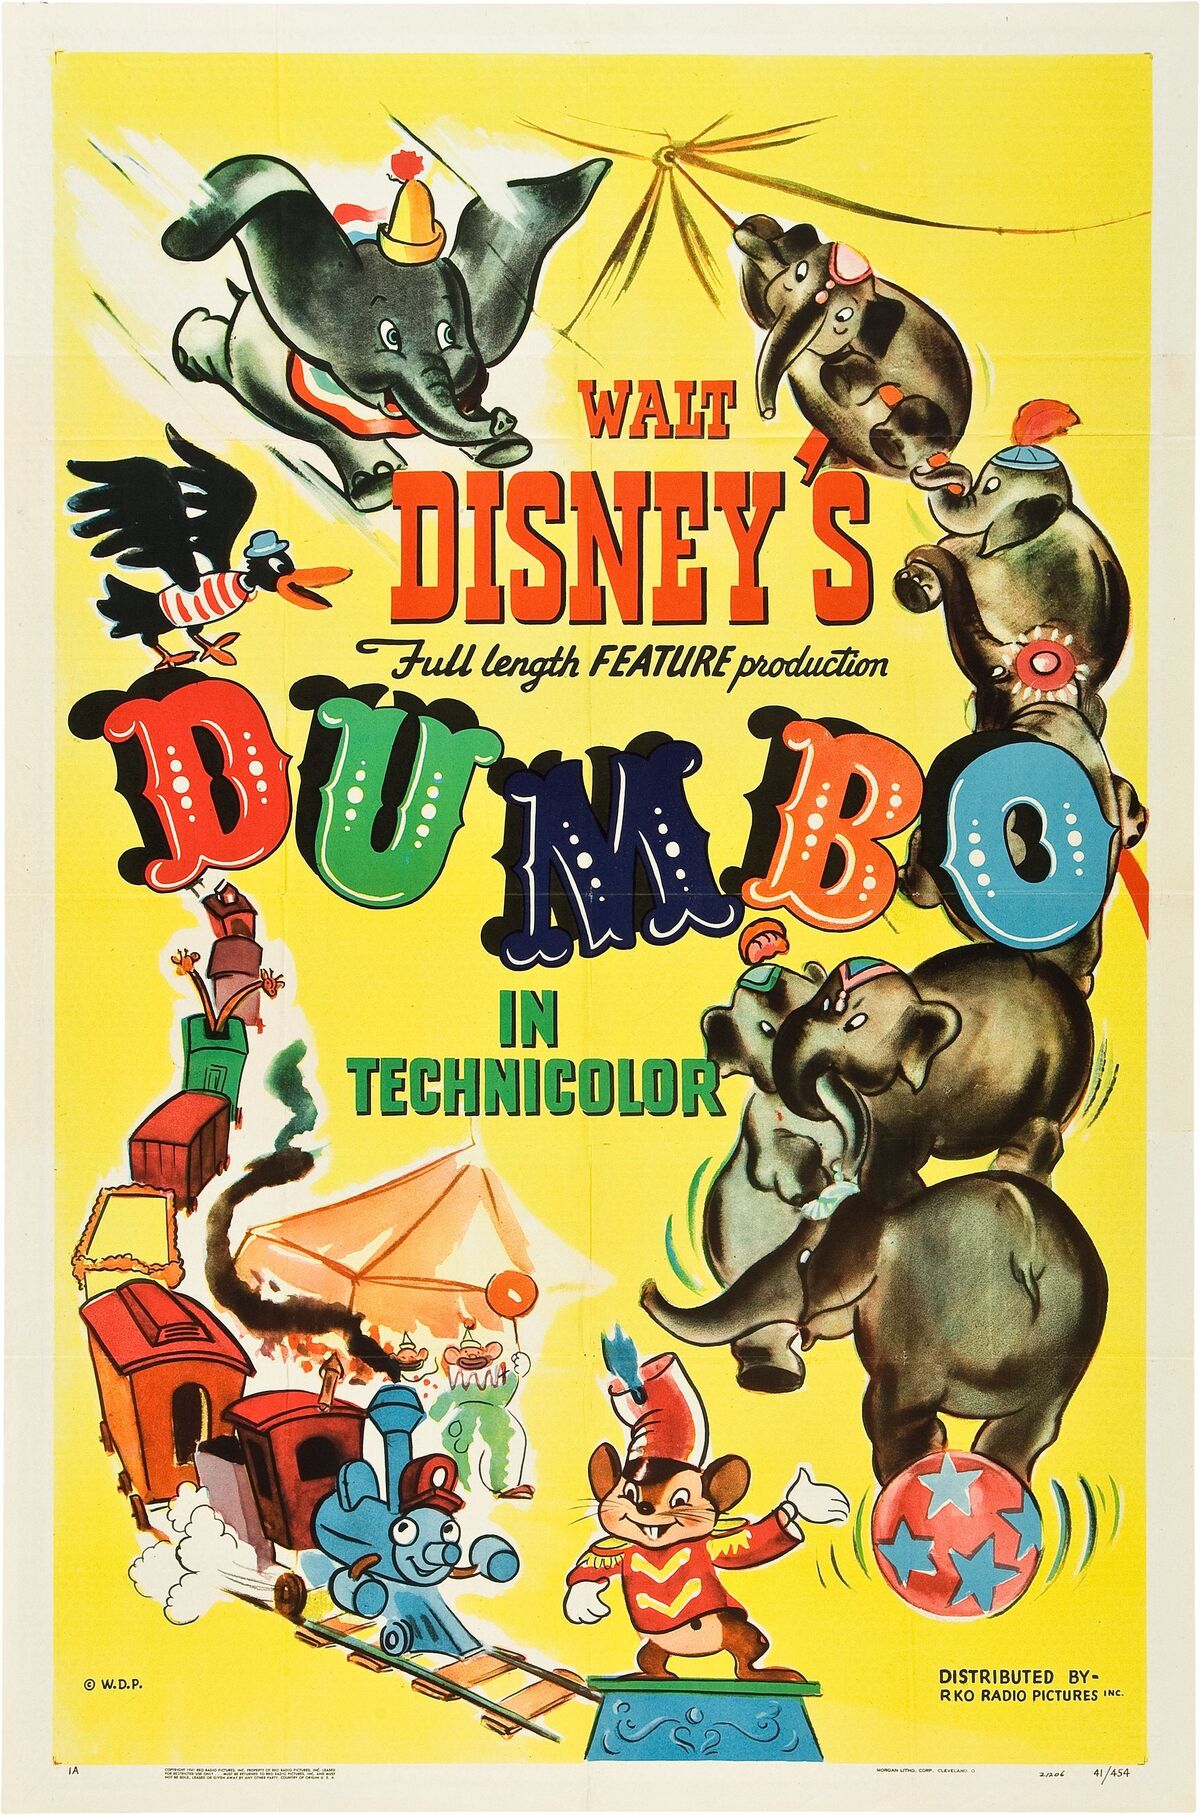 DVD WALT DISNEY GRAND CLASSIQUE DUMBO